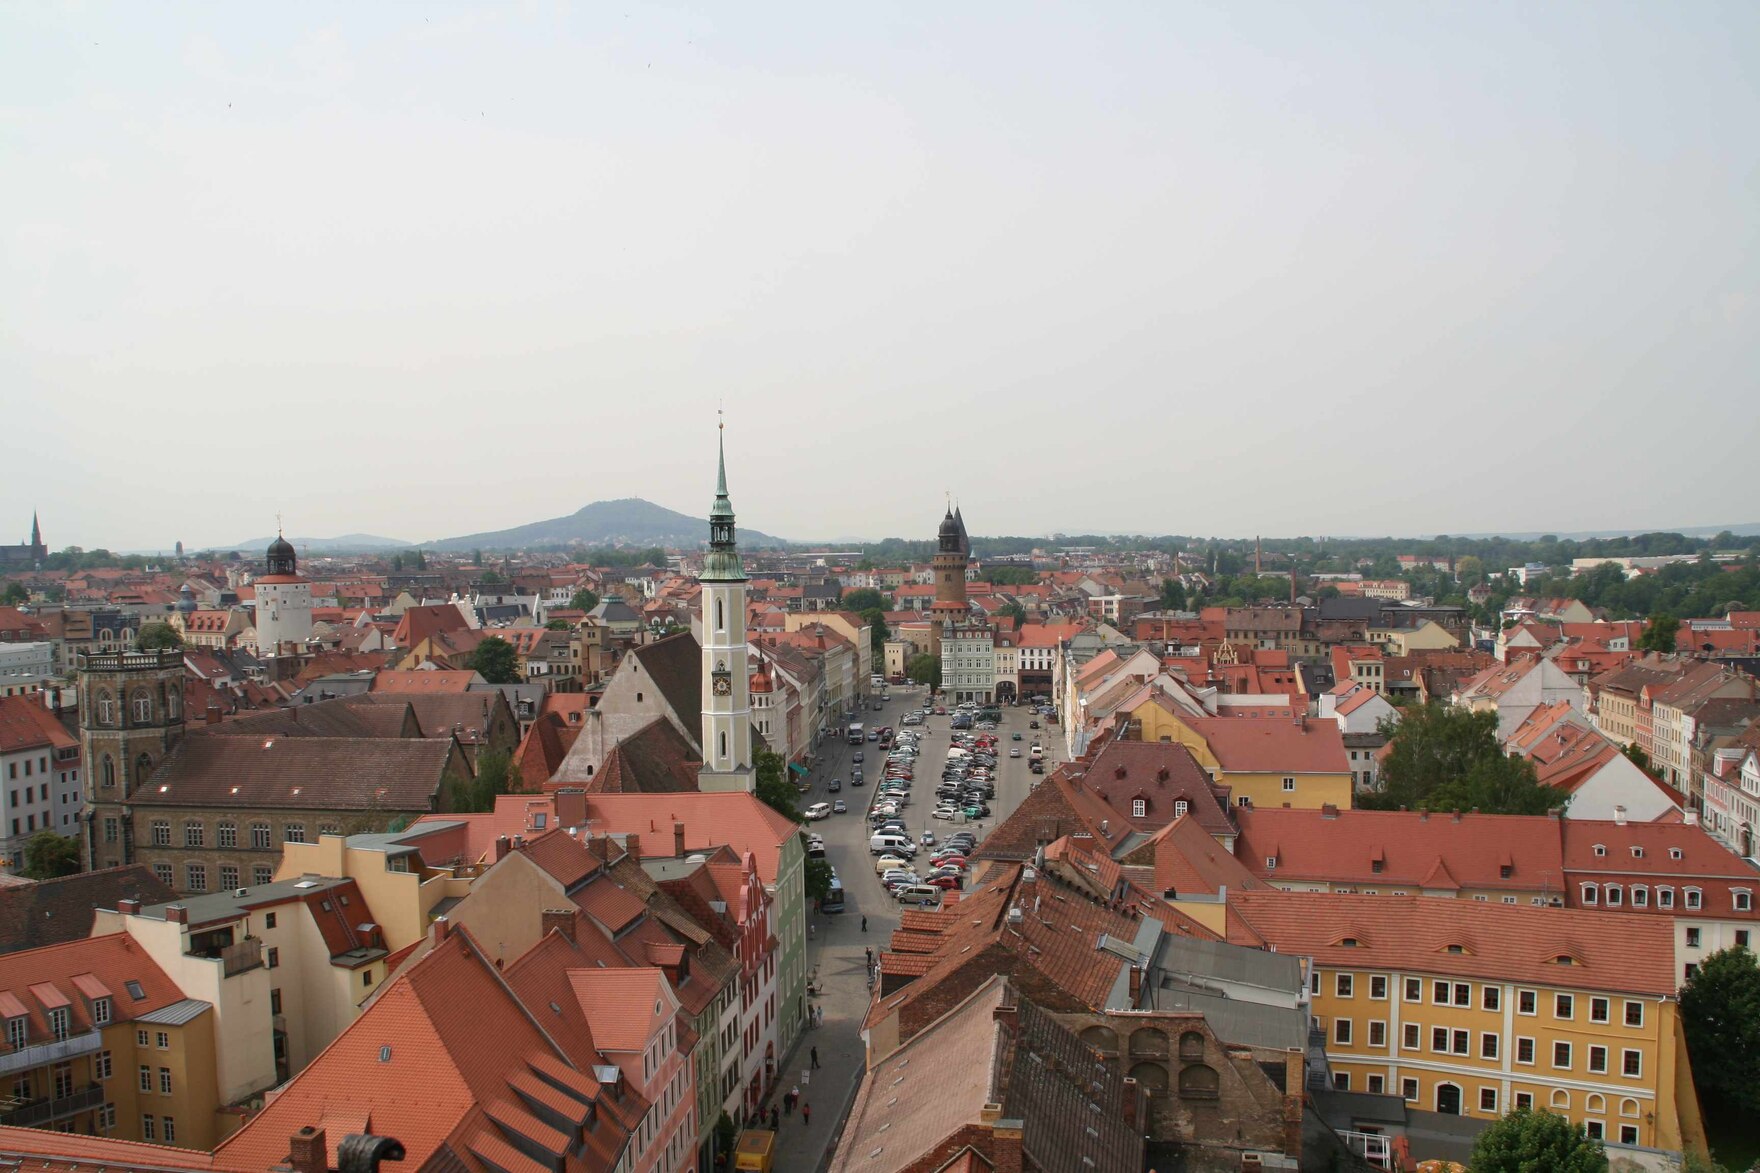 Städtebau Görlitz, Altstadt mit umgebender Landschaft